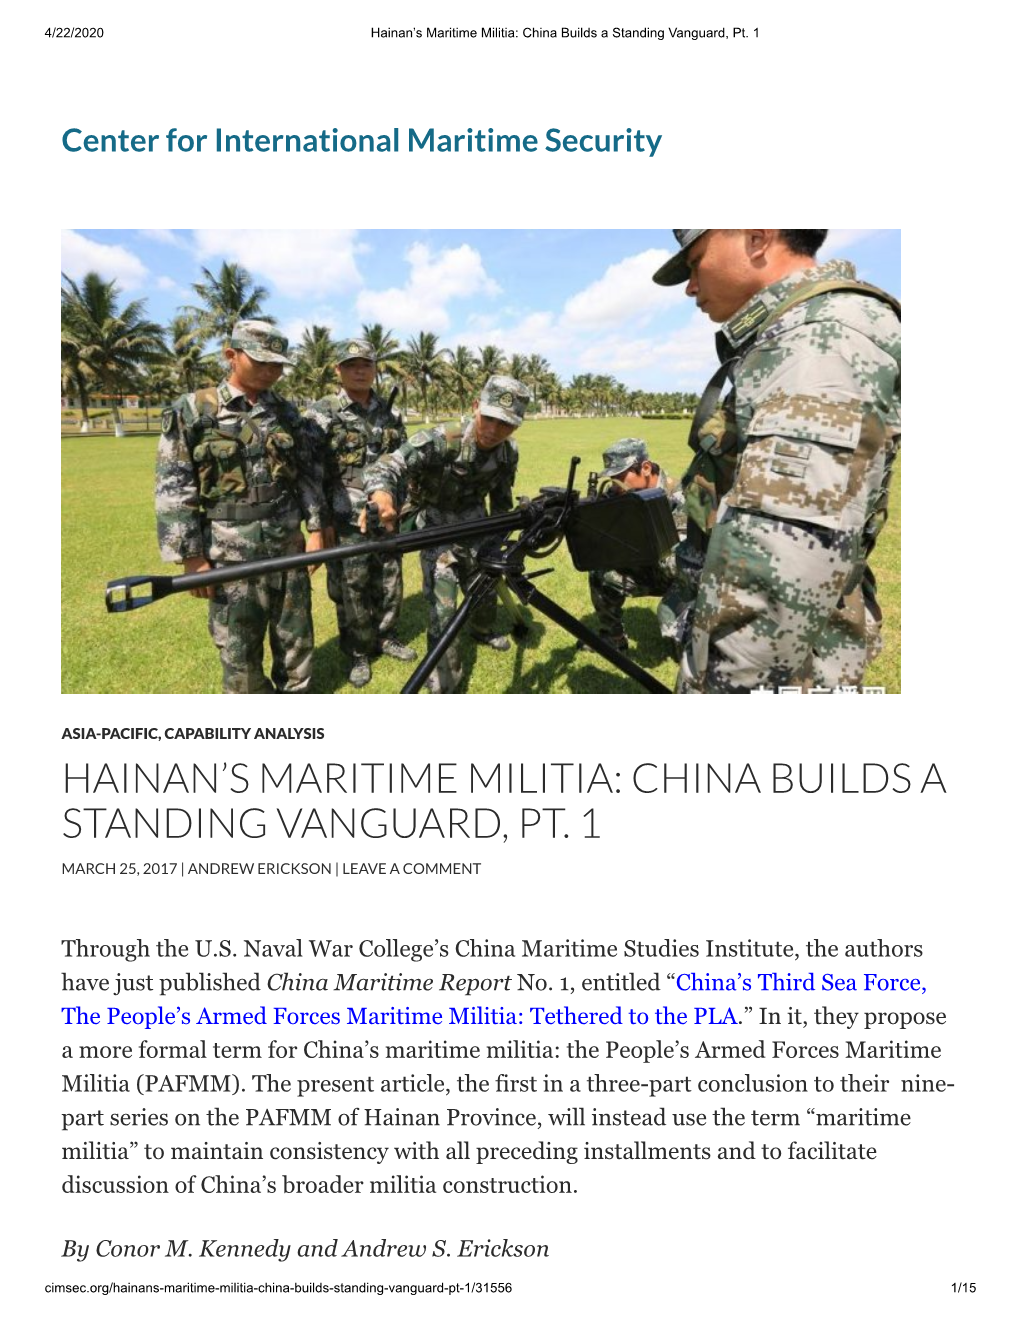 Hainan's Maritime Militia